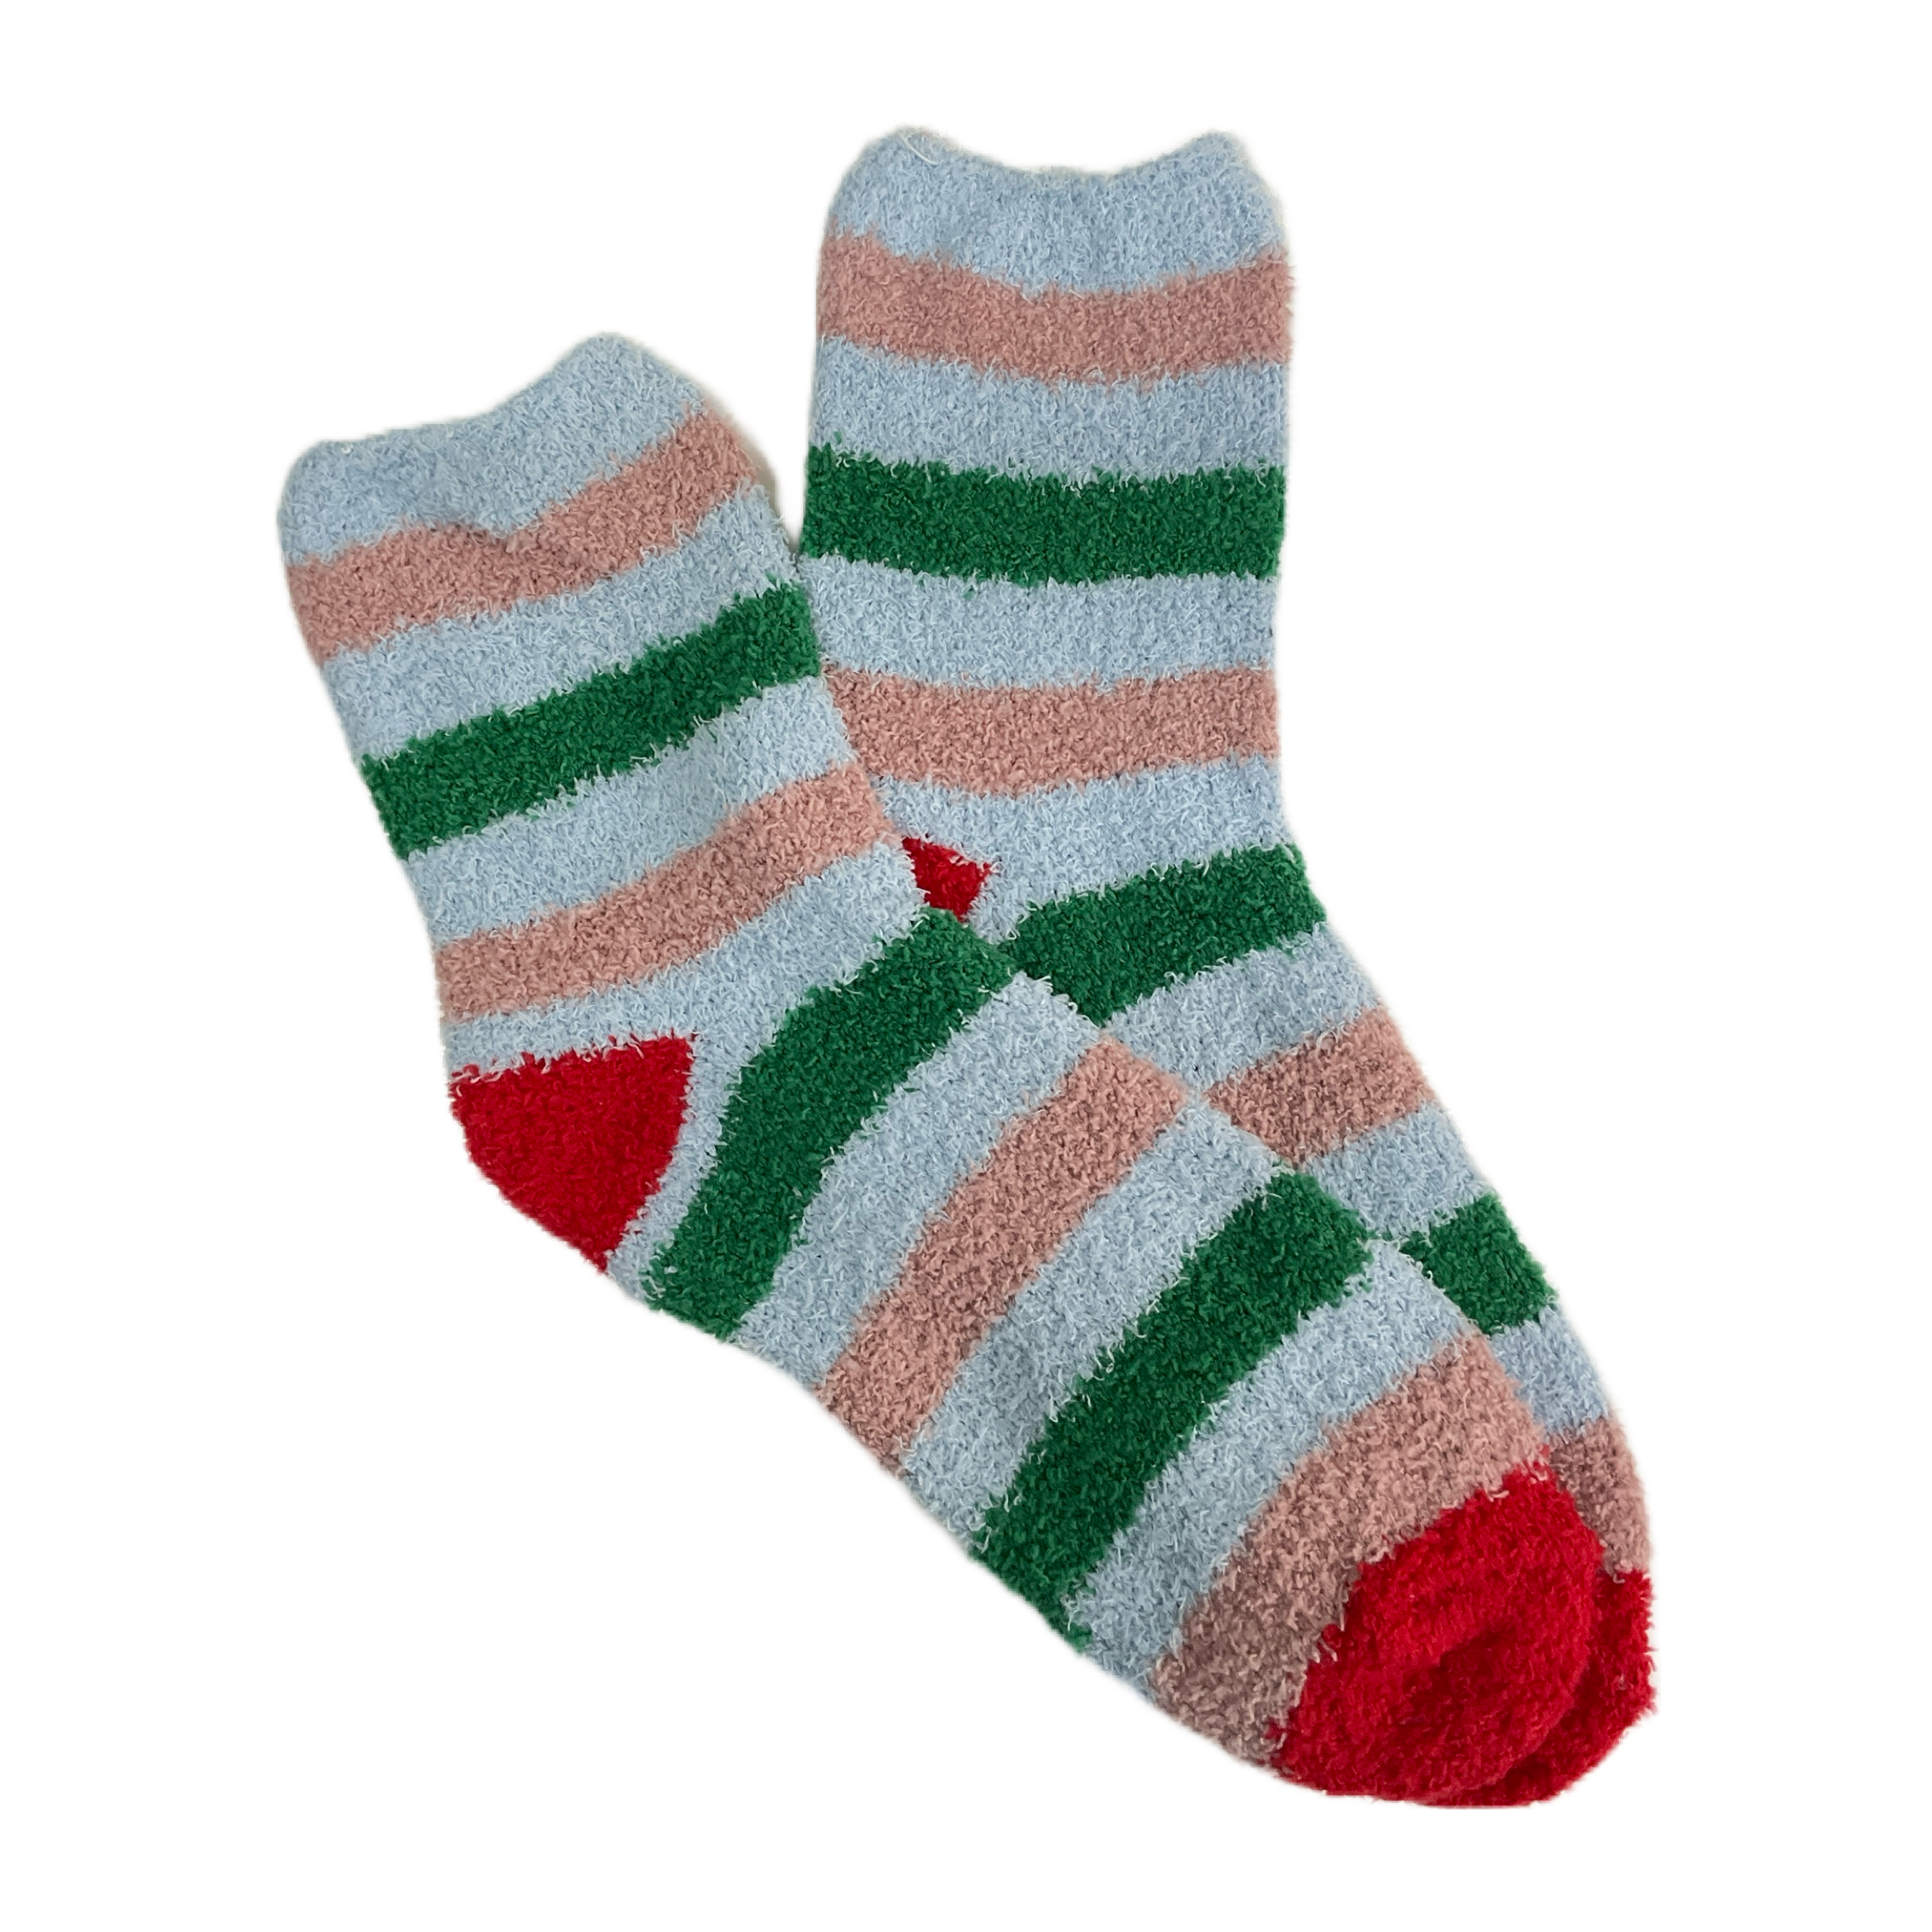 Striped Fuzzy Socks from the Sock Panda (Blue, Green, Red, Tan)